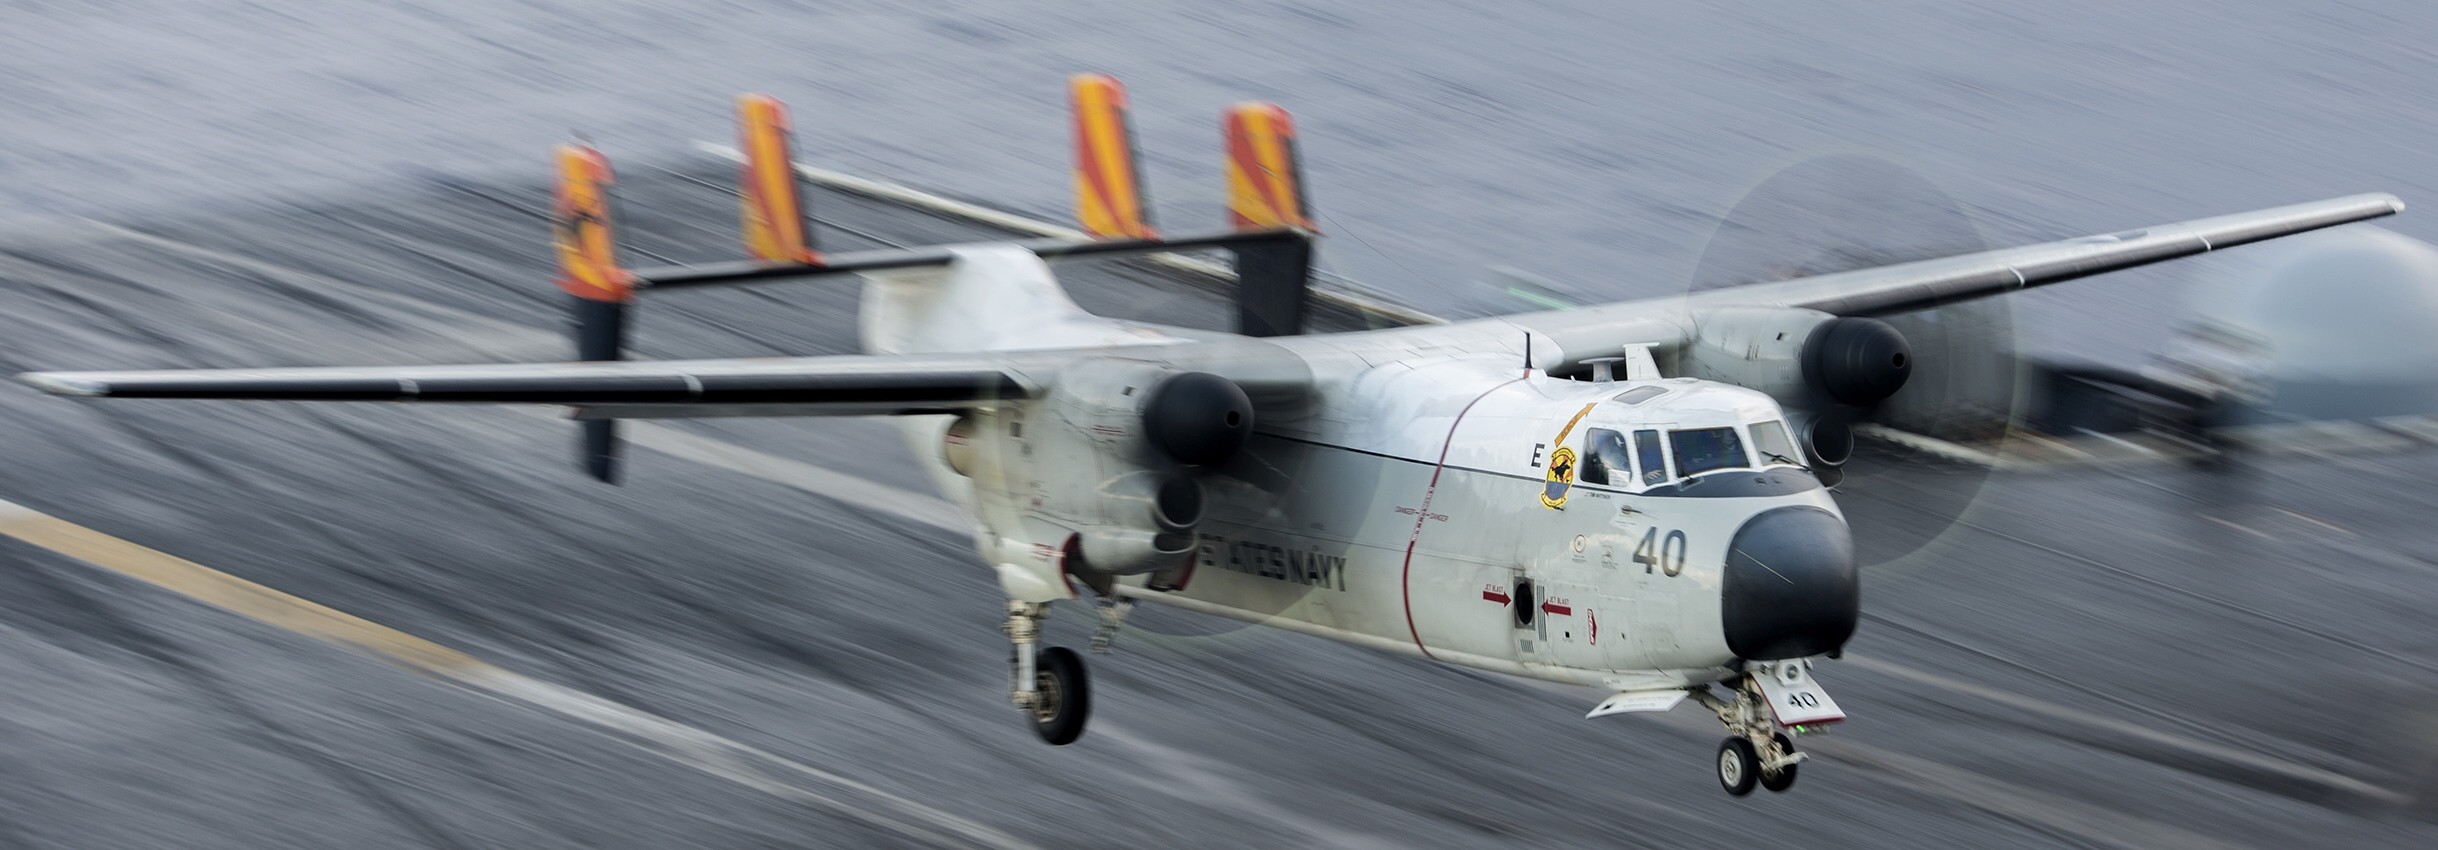 vrc-40 rawhides fleet logistics support squadron flelogsupron us navy grumman c-2a greyhound uss harry s. truman cvn-75 143